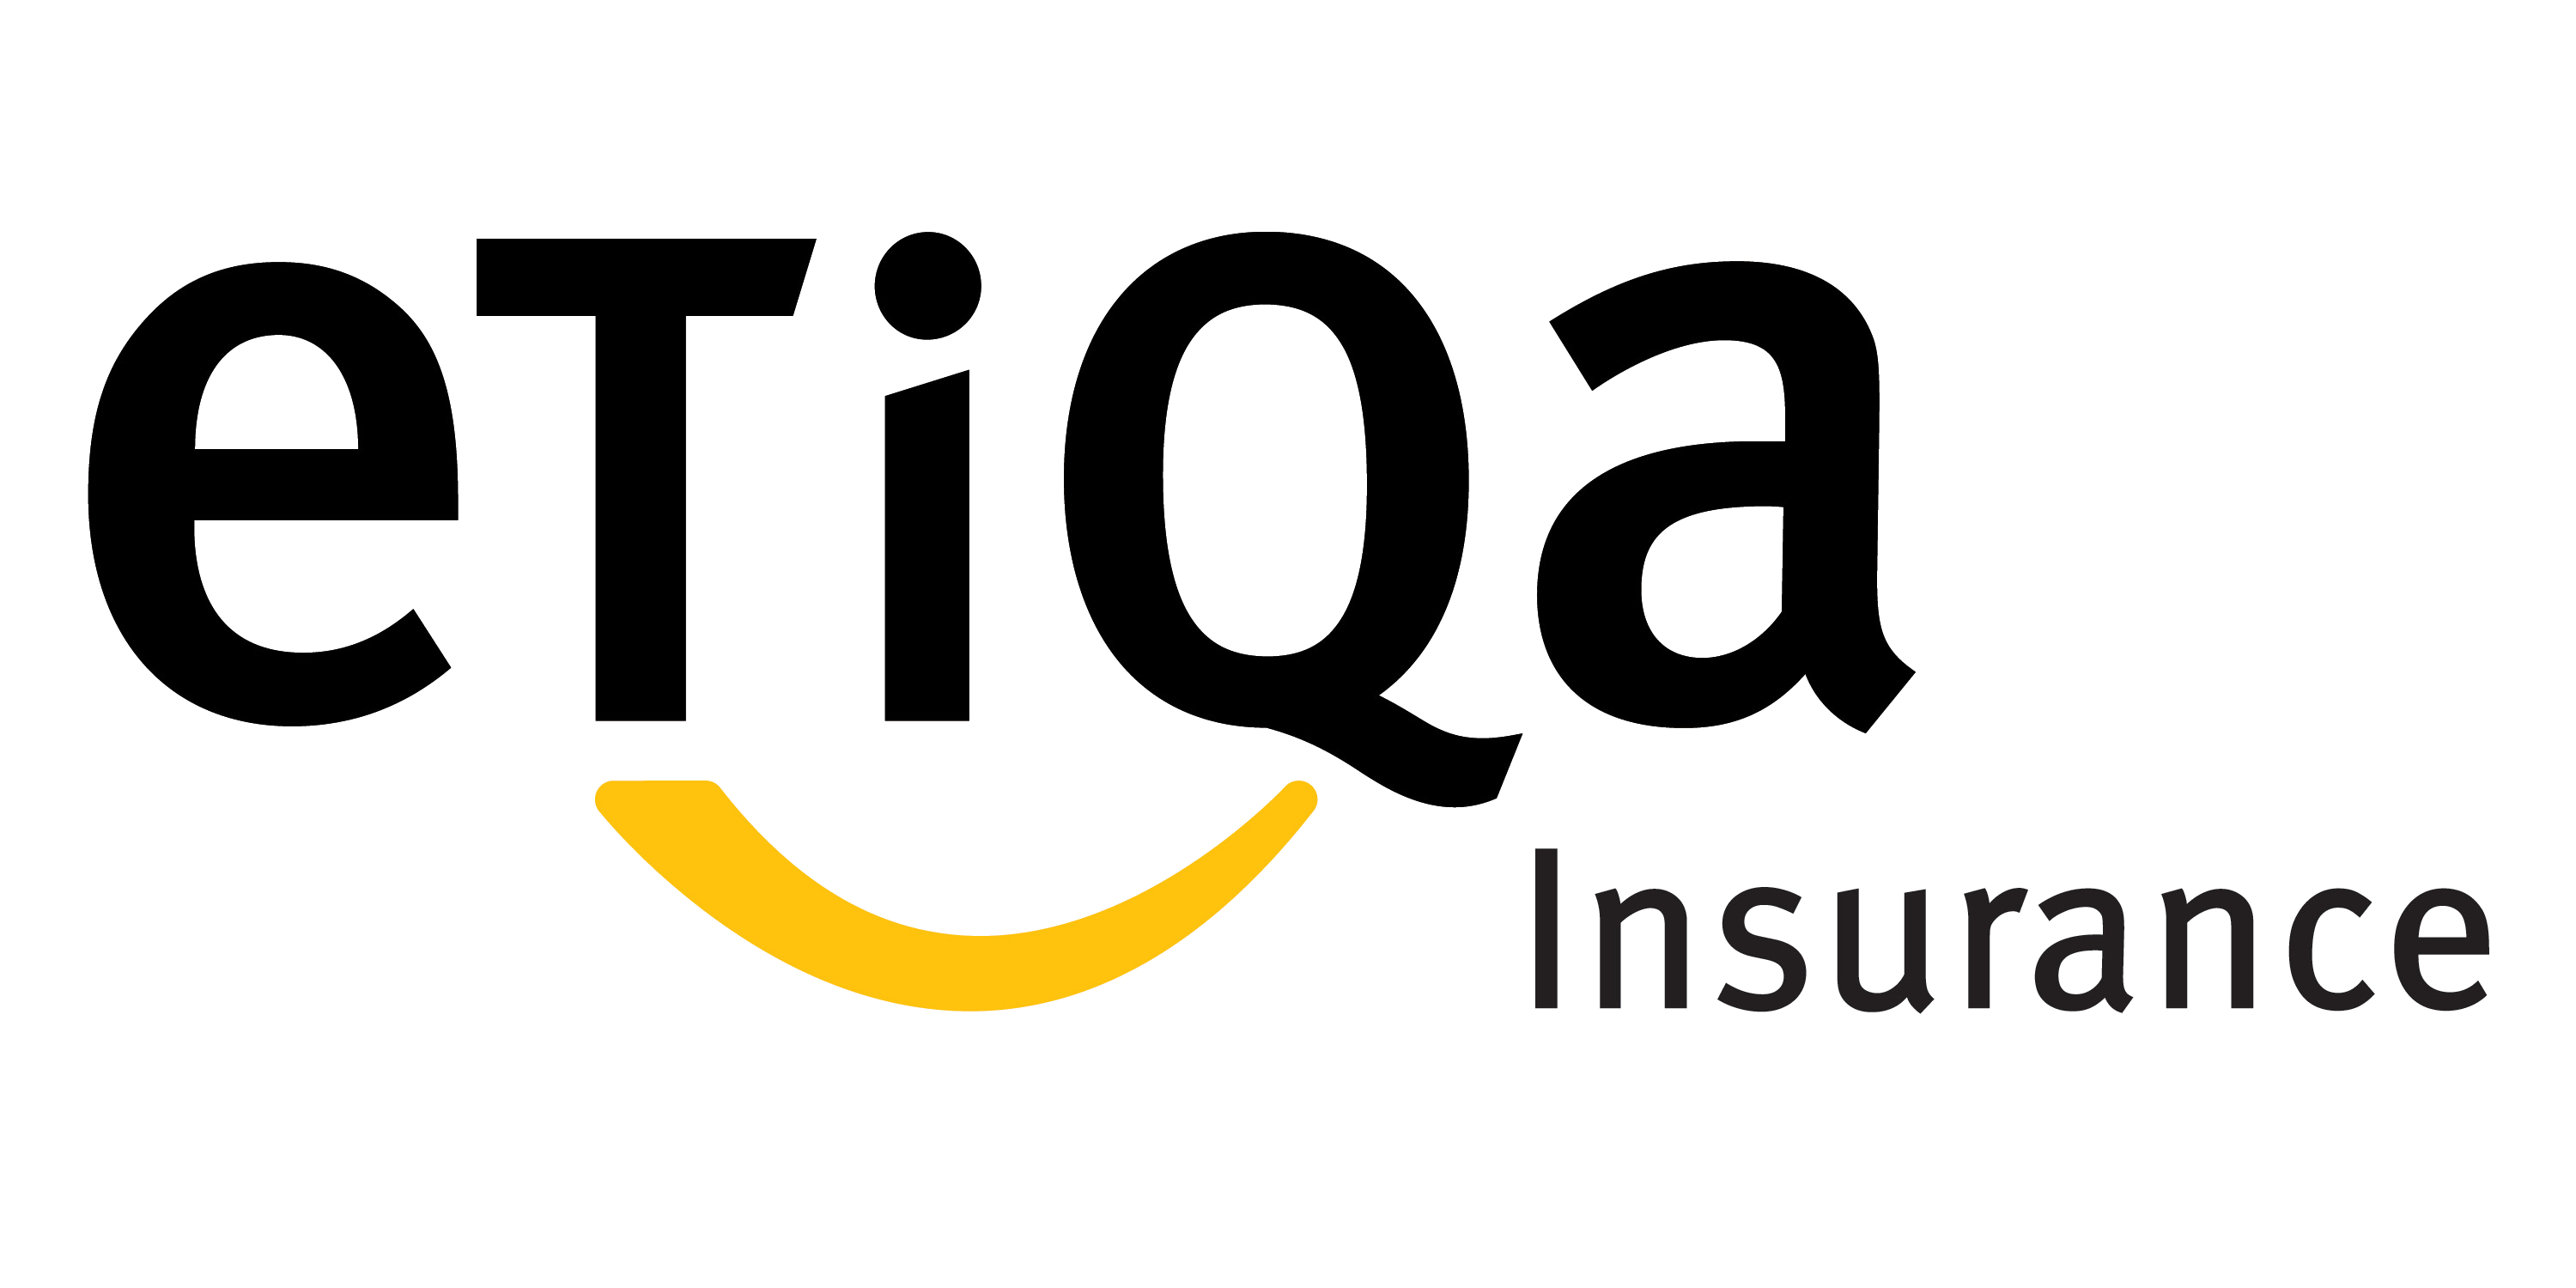 Etiqa insurance login